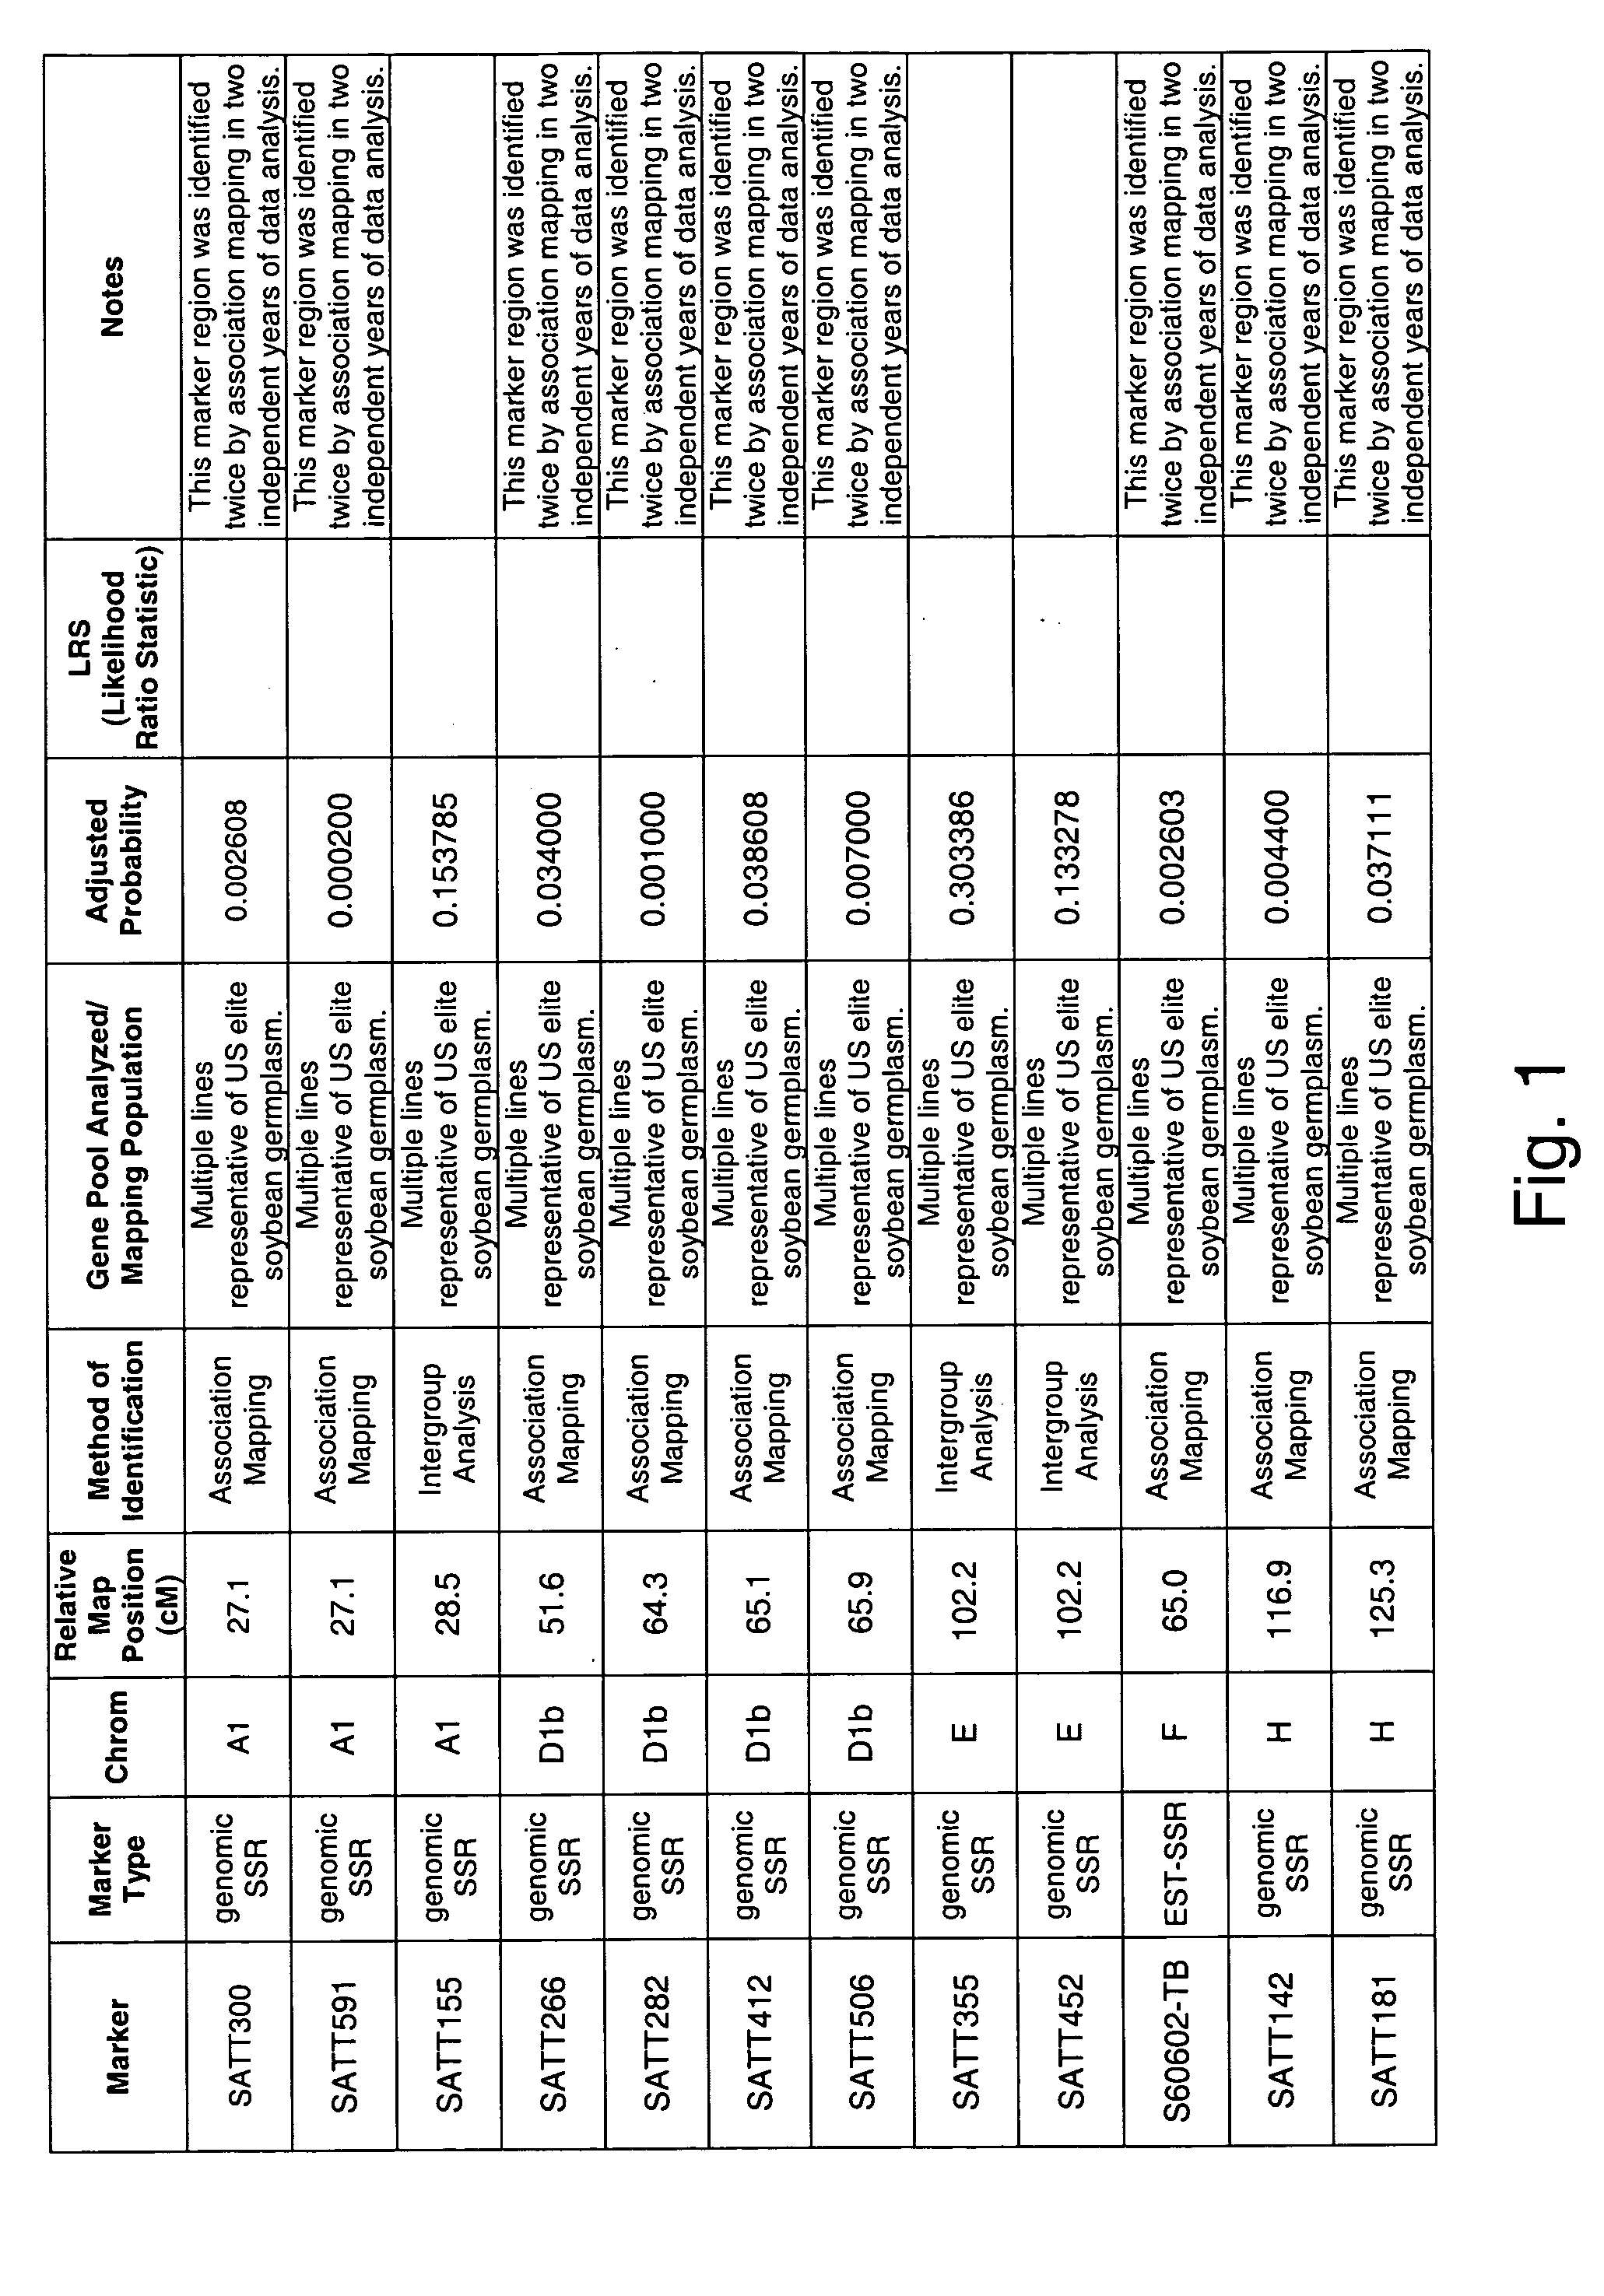 Genetic loci associated with fusarium solani tolerance in soybean